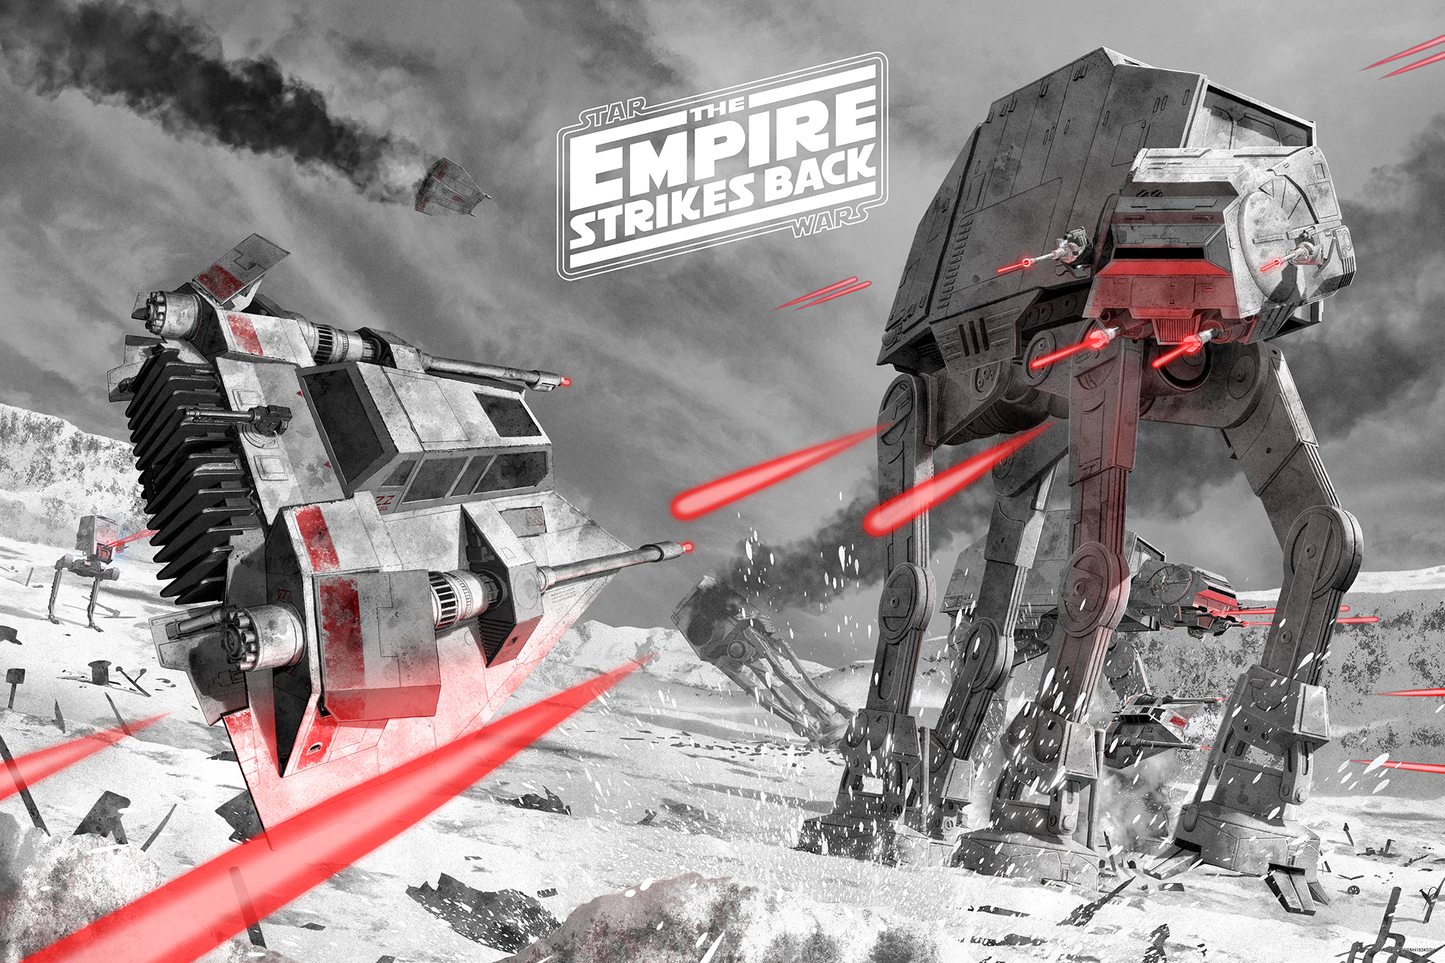 Jason Raish "Ground Assault (The Empire Strikes Back)" Variant